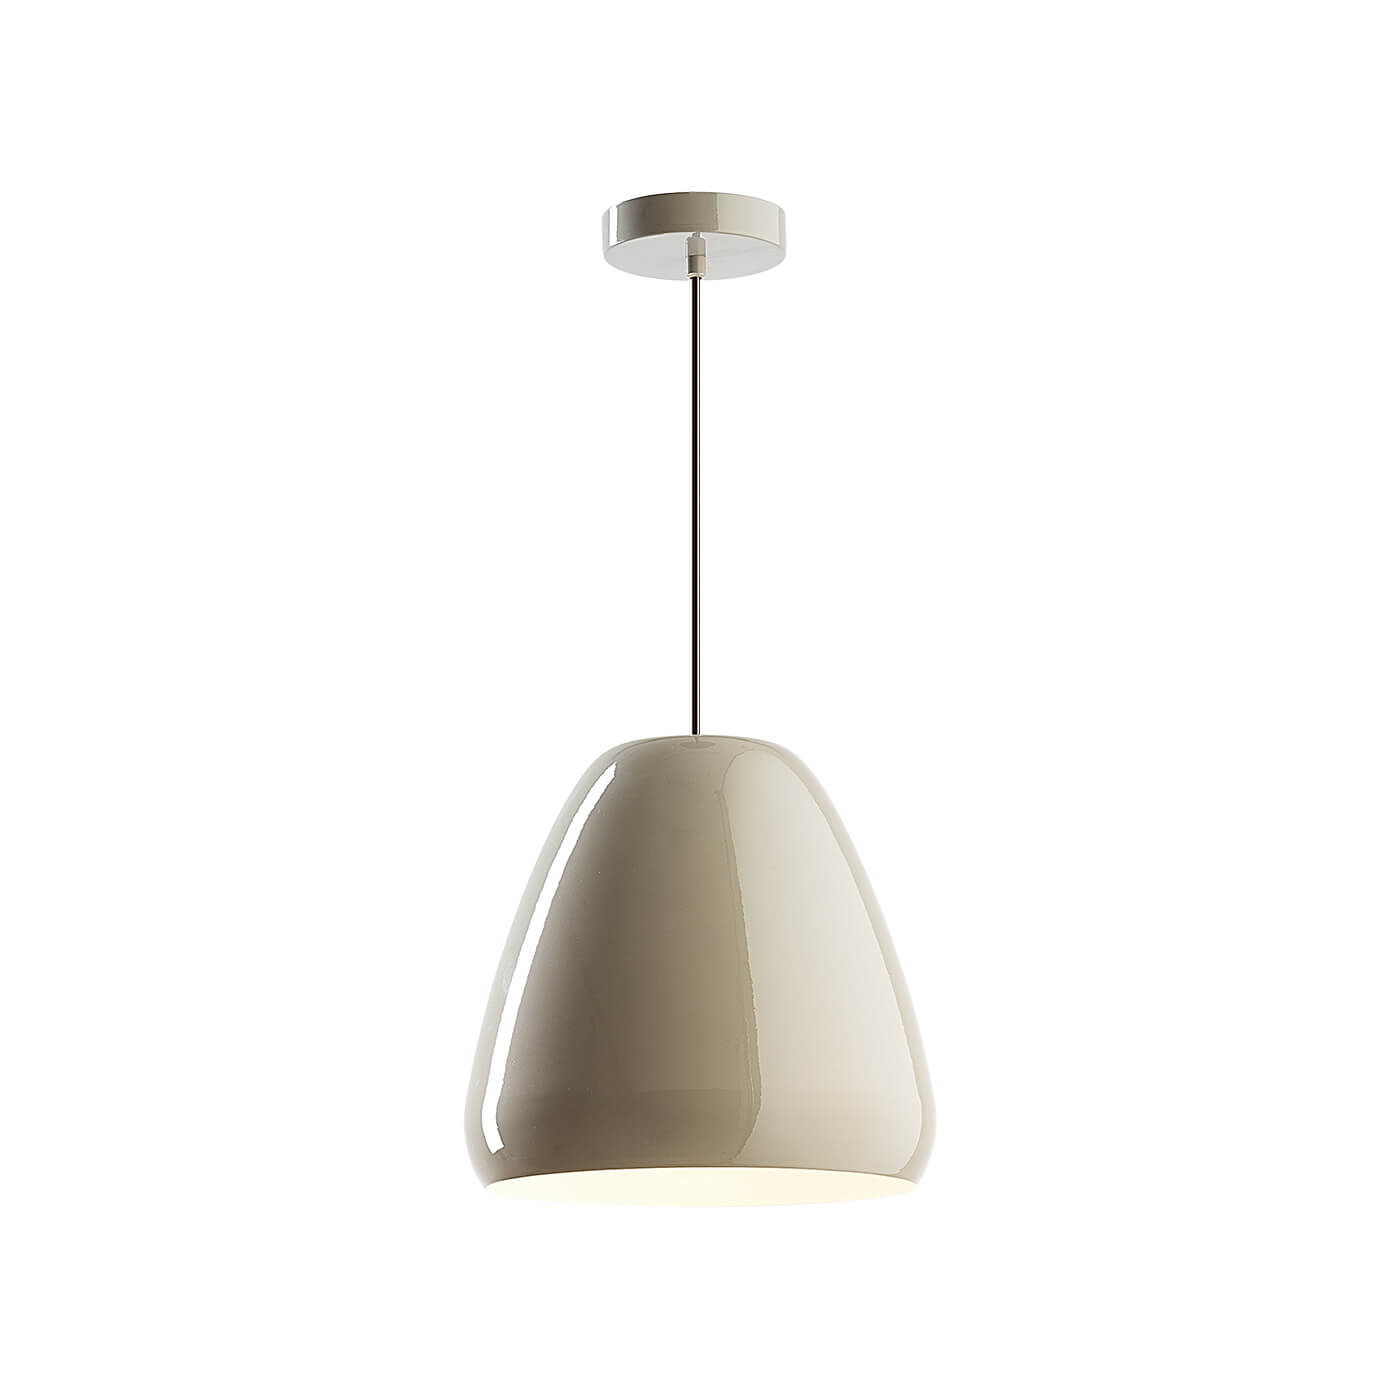 Pendul gri RANG – Design modern, minimalist pentru birou, office, horeca